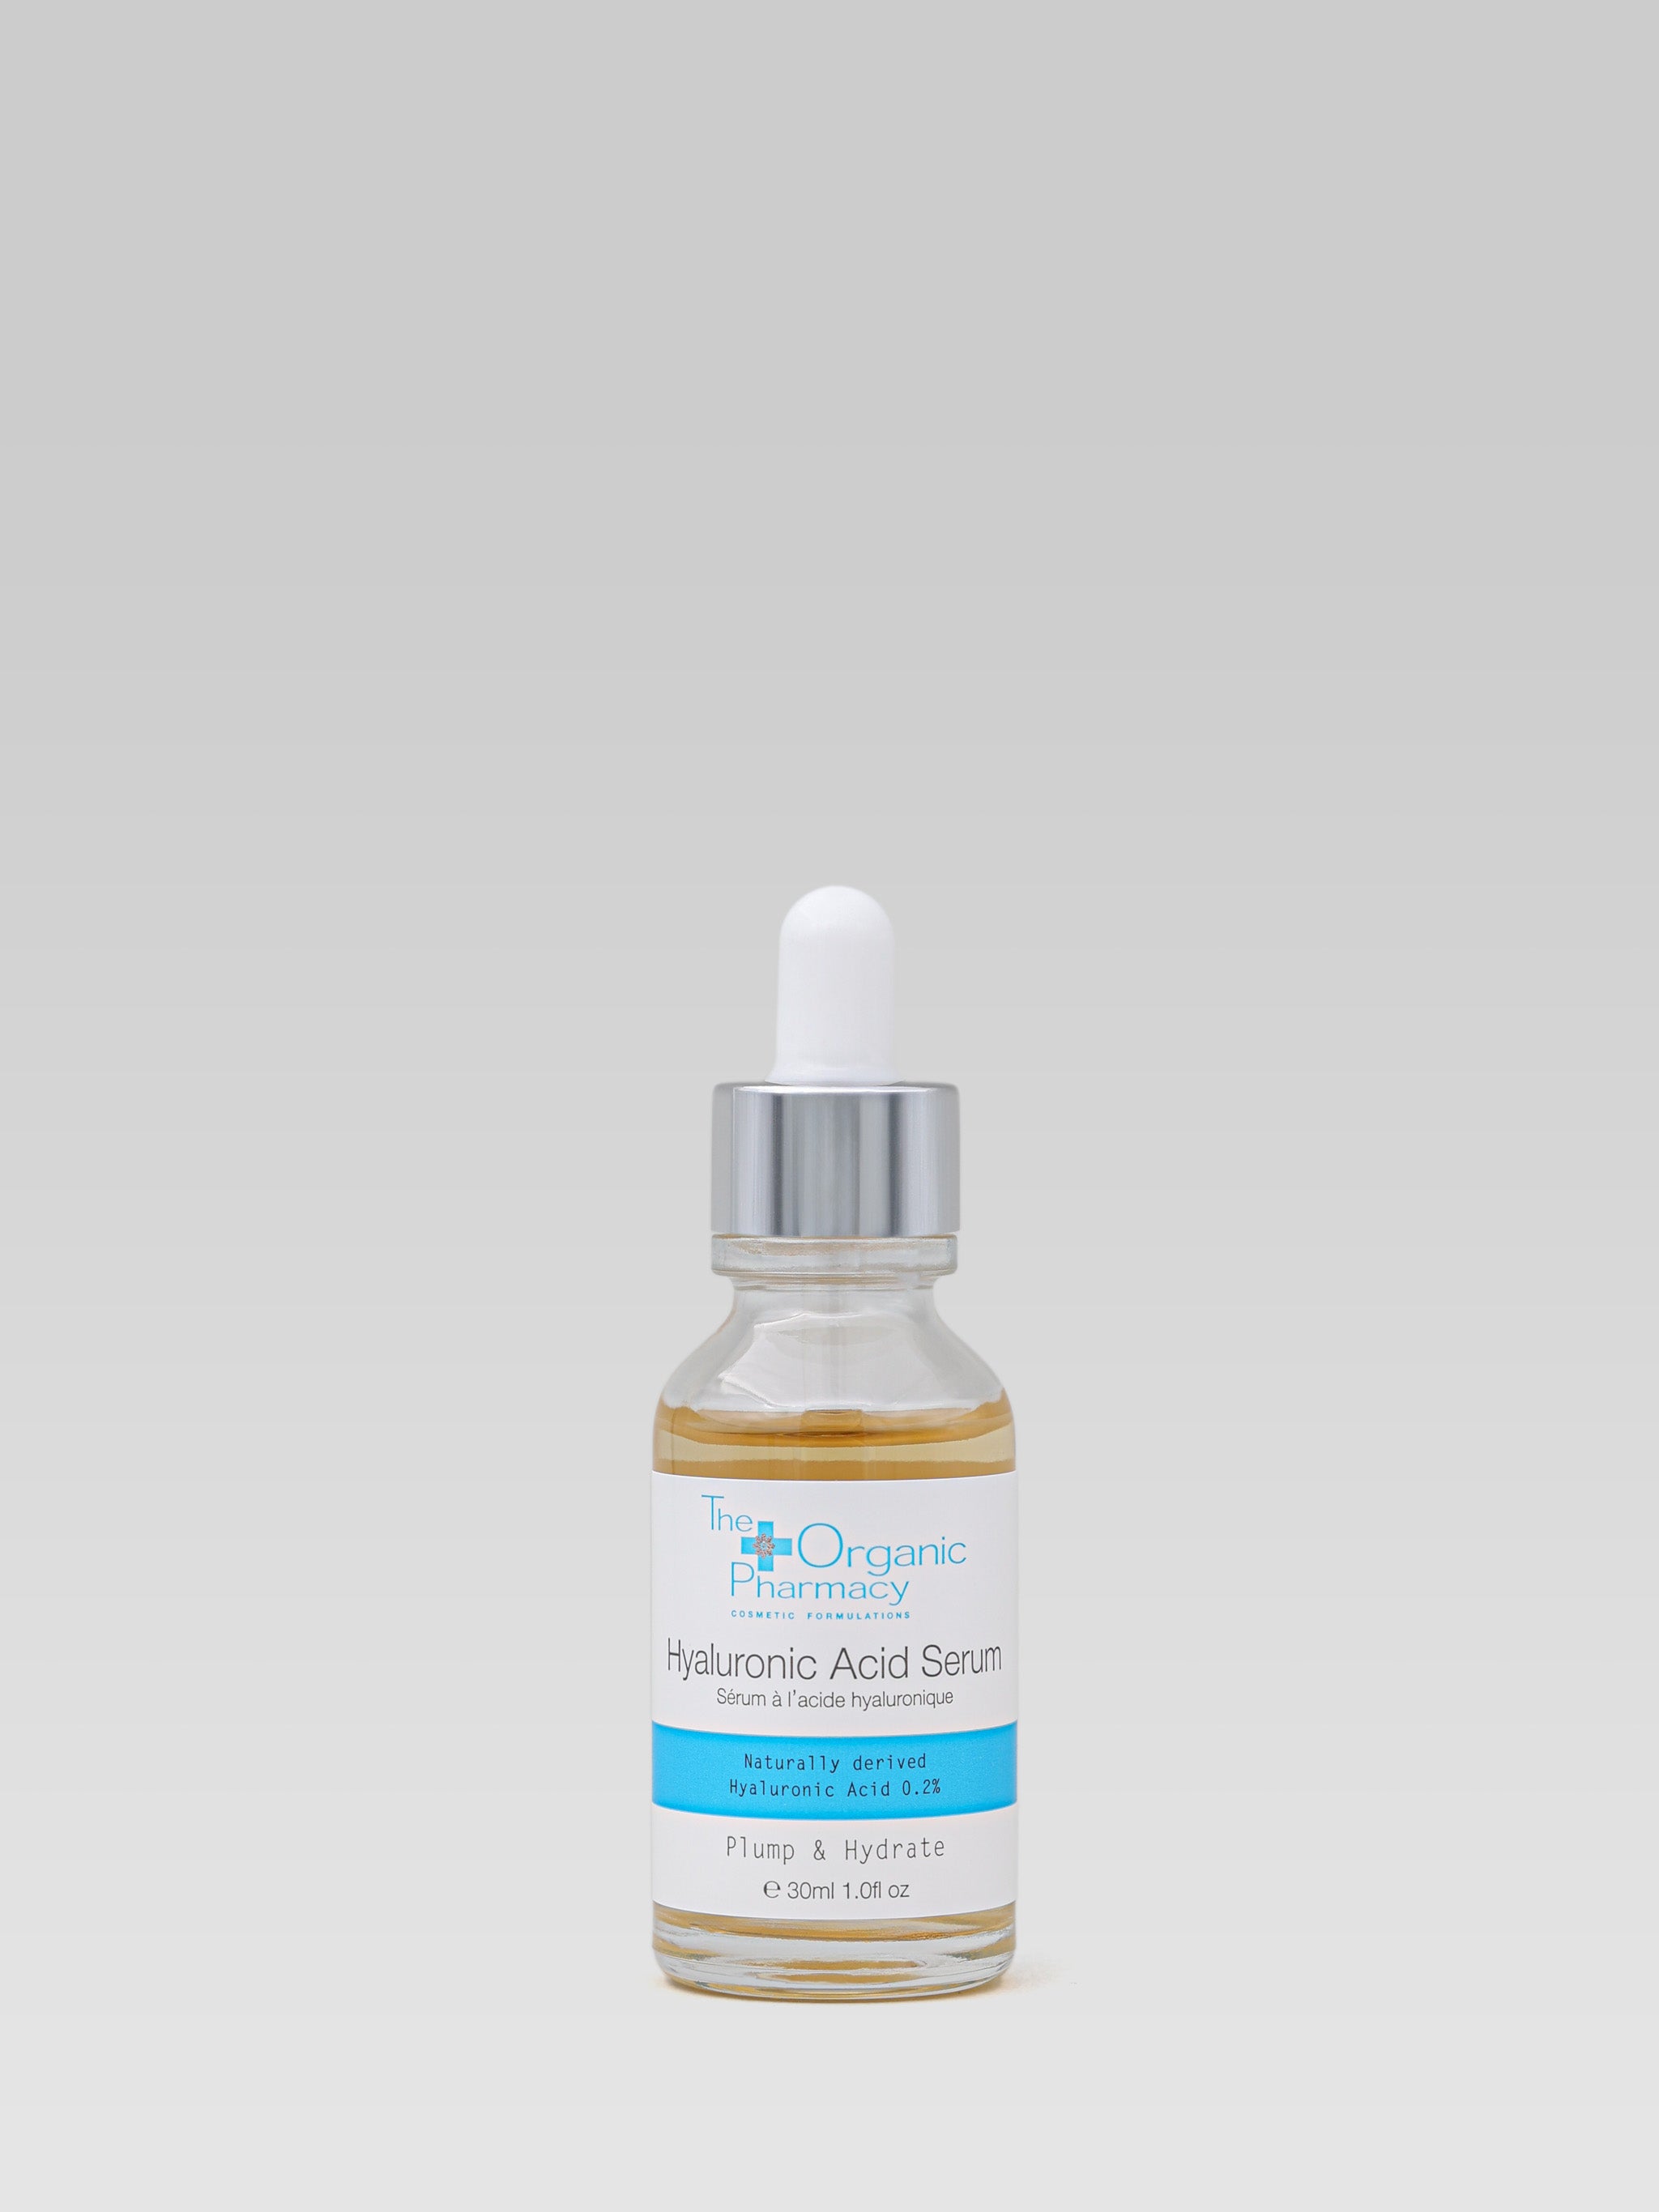 The Organic Pharmacy Hyaluronic Acid Serum product shot